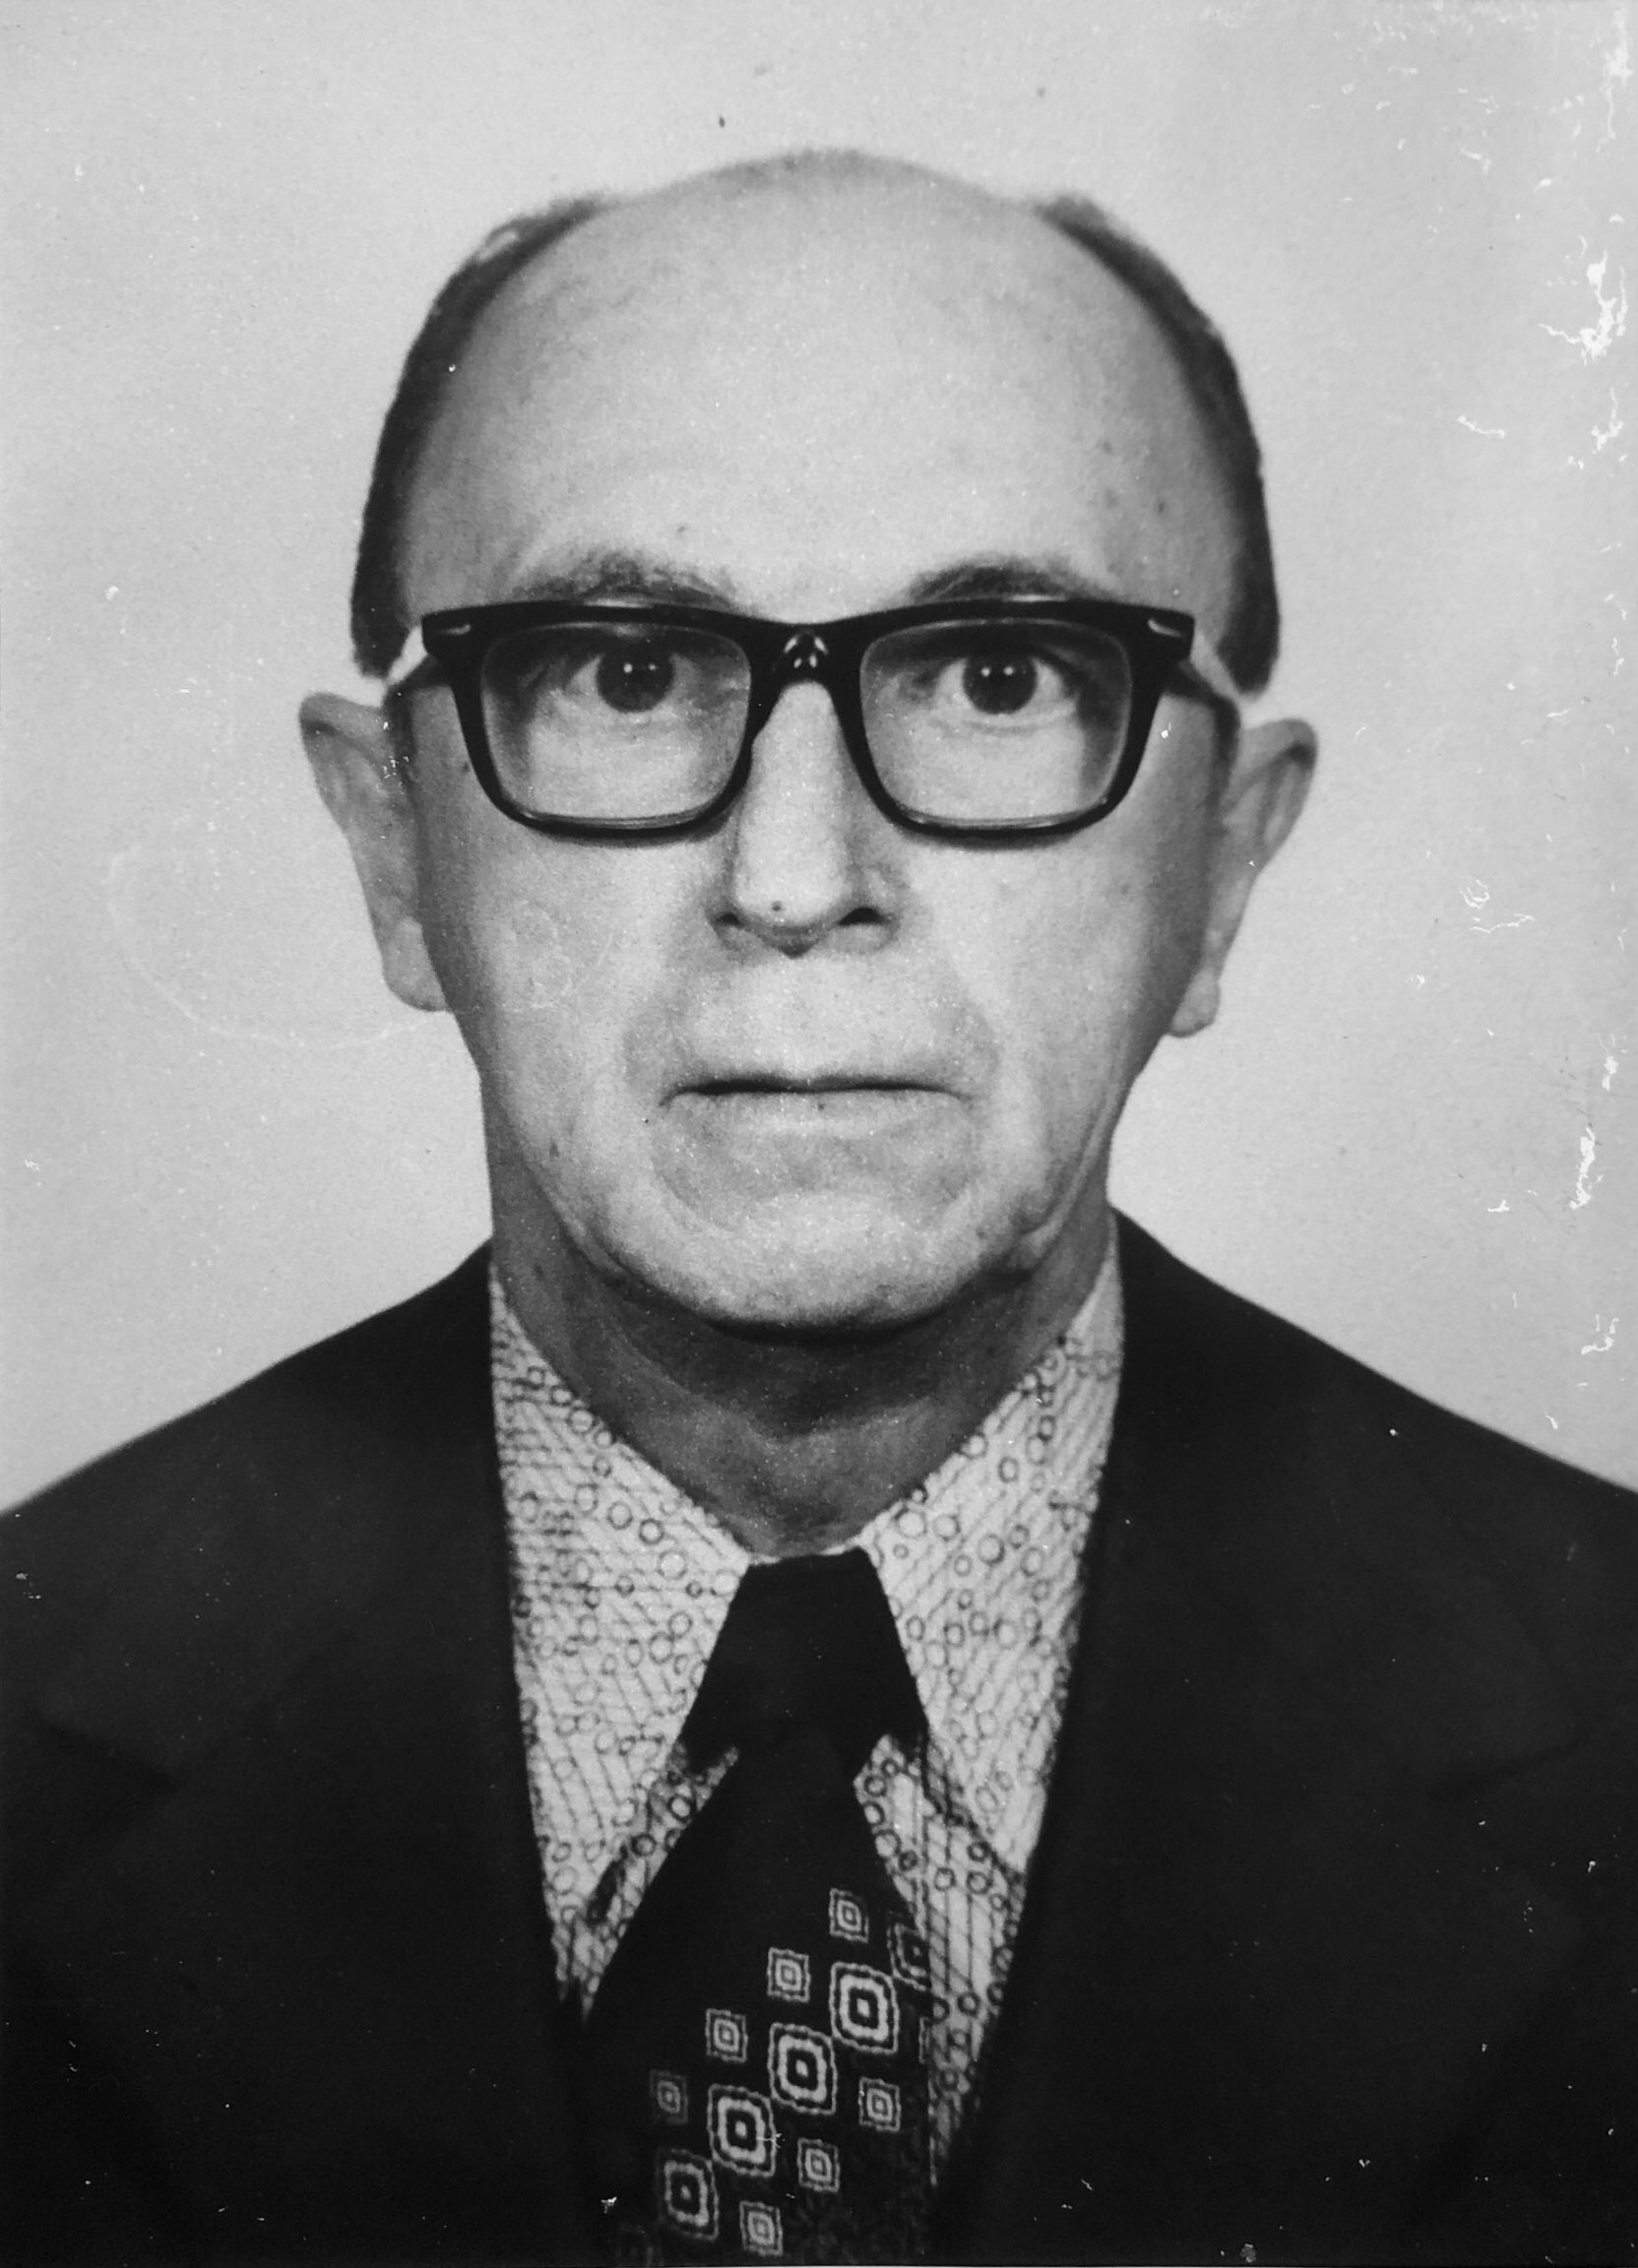 Dr. Políbio Bonald de Paiva Pedrosa (1951 - 1953)